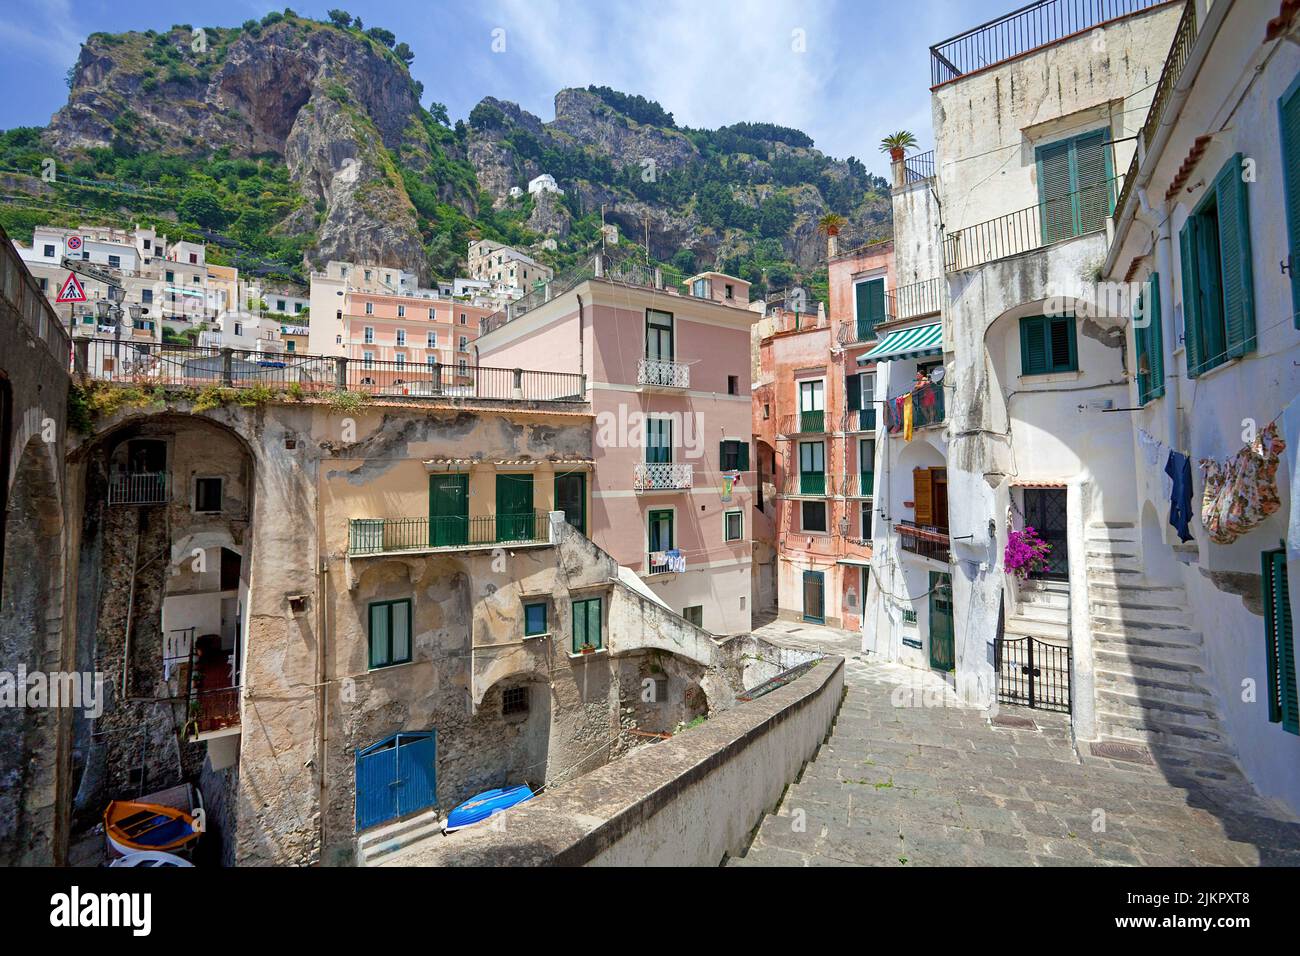 Alley in the old town of Atrani, neighbor village of Amalfi, Amalfi coast, Unesco World Heritage site, Campania, Italy, Europe Stock Photo